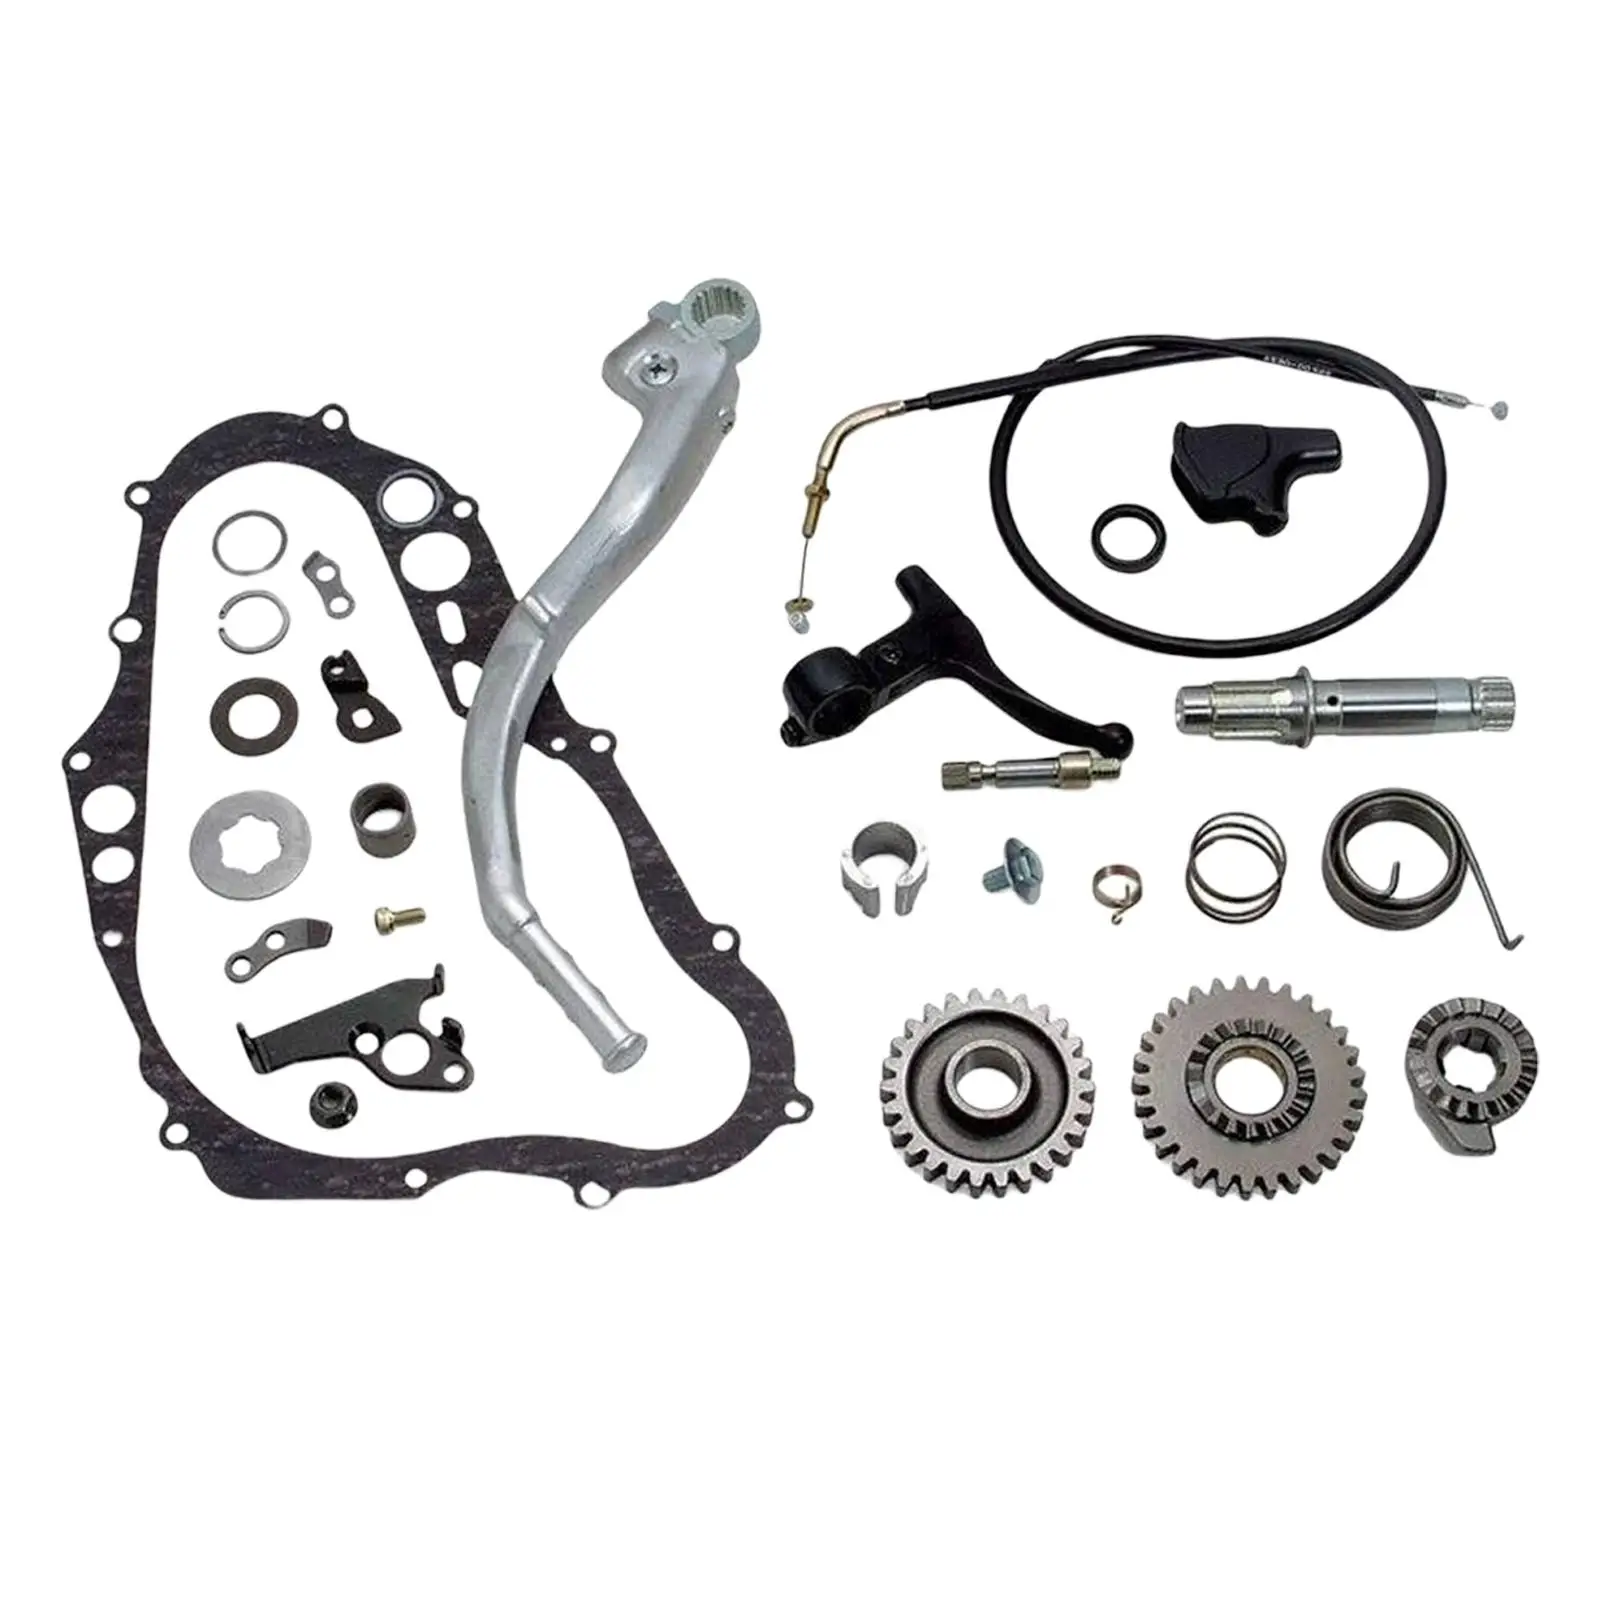 

Complete Starter Kick Start Kit 26300-29815 Motorcycle Spare Parts Kickstarter Kit for Suzuki Dr-Z400E Dr-Z400SM Dr-Z400S